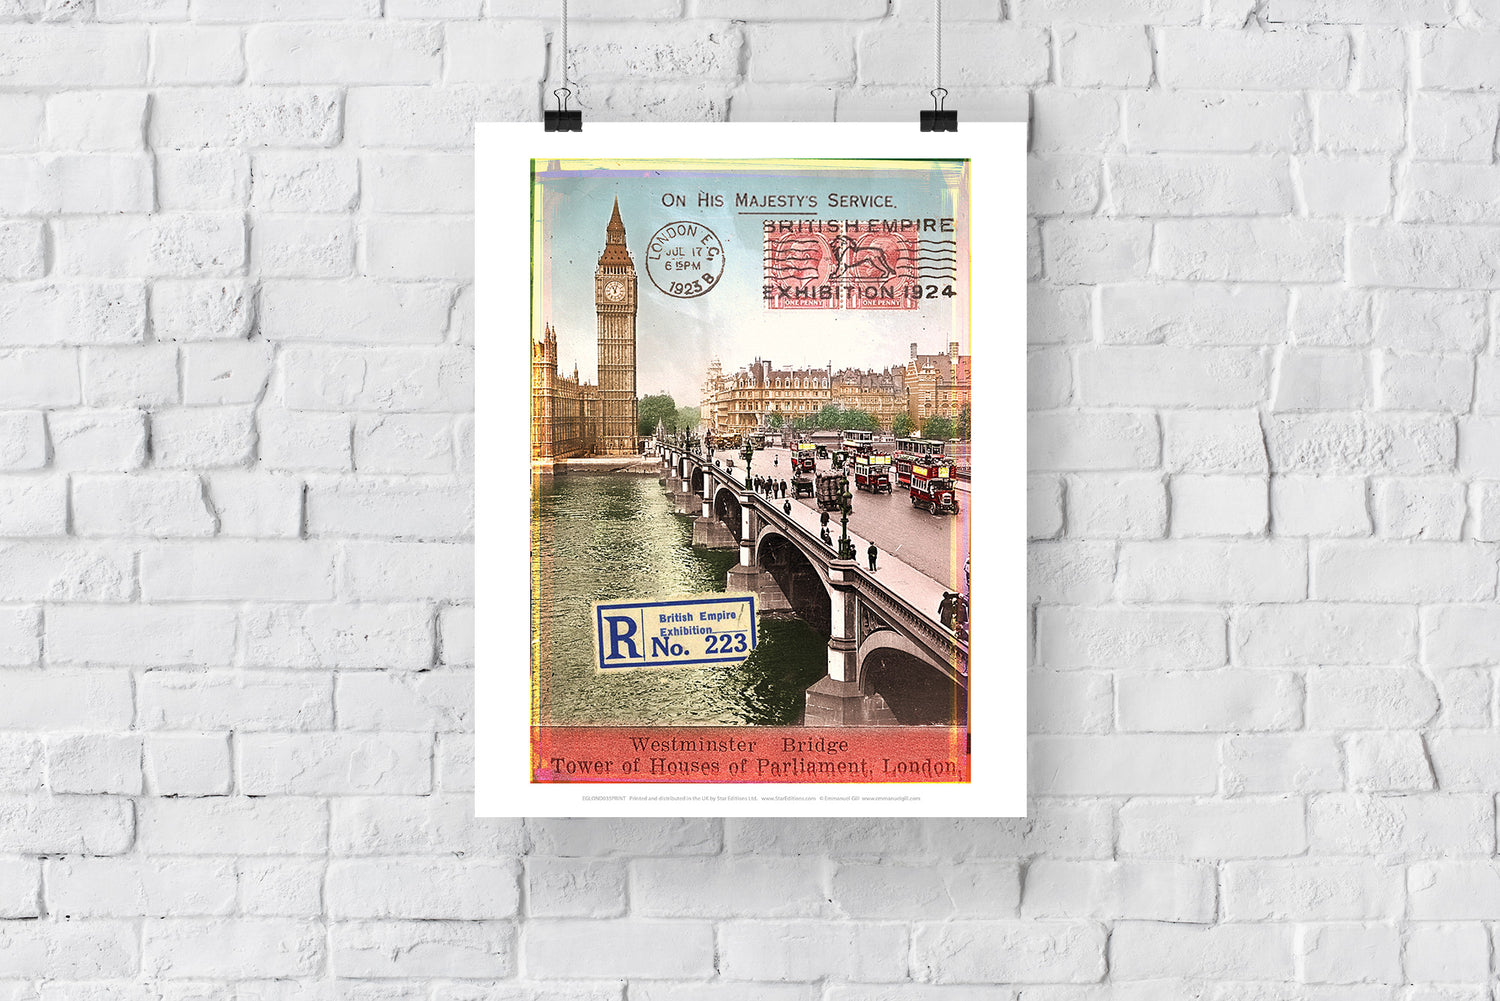 Westminster Bridge, London - Art Print